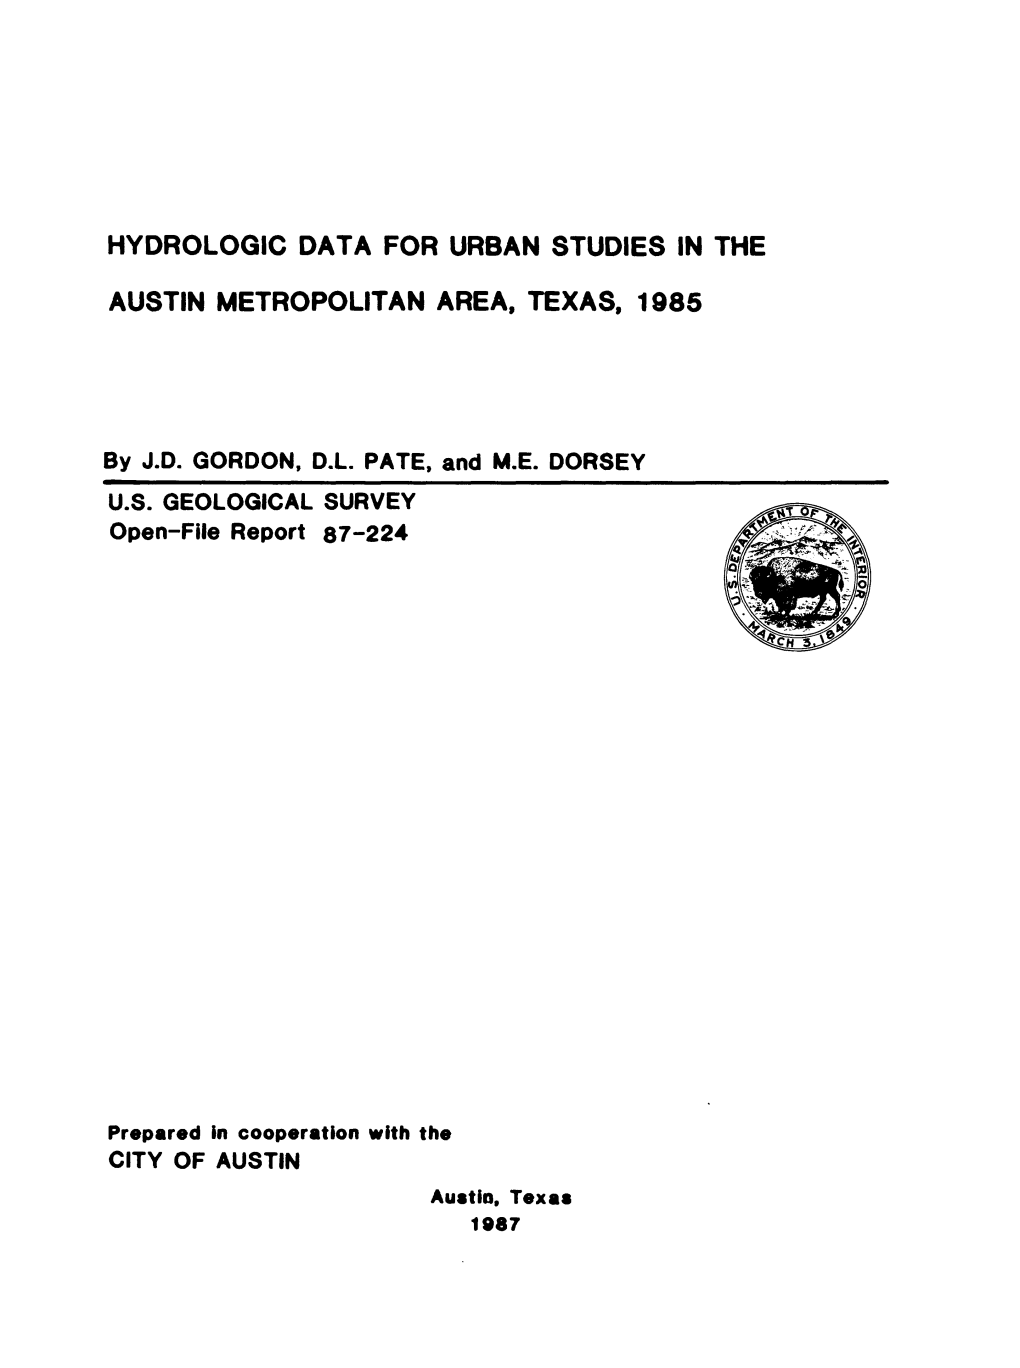 HYDROLOGIC DATA for URBAN STUDIES in the AUSTIN, METROPOLITAN AREA, TEXAS 1985 by J